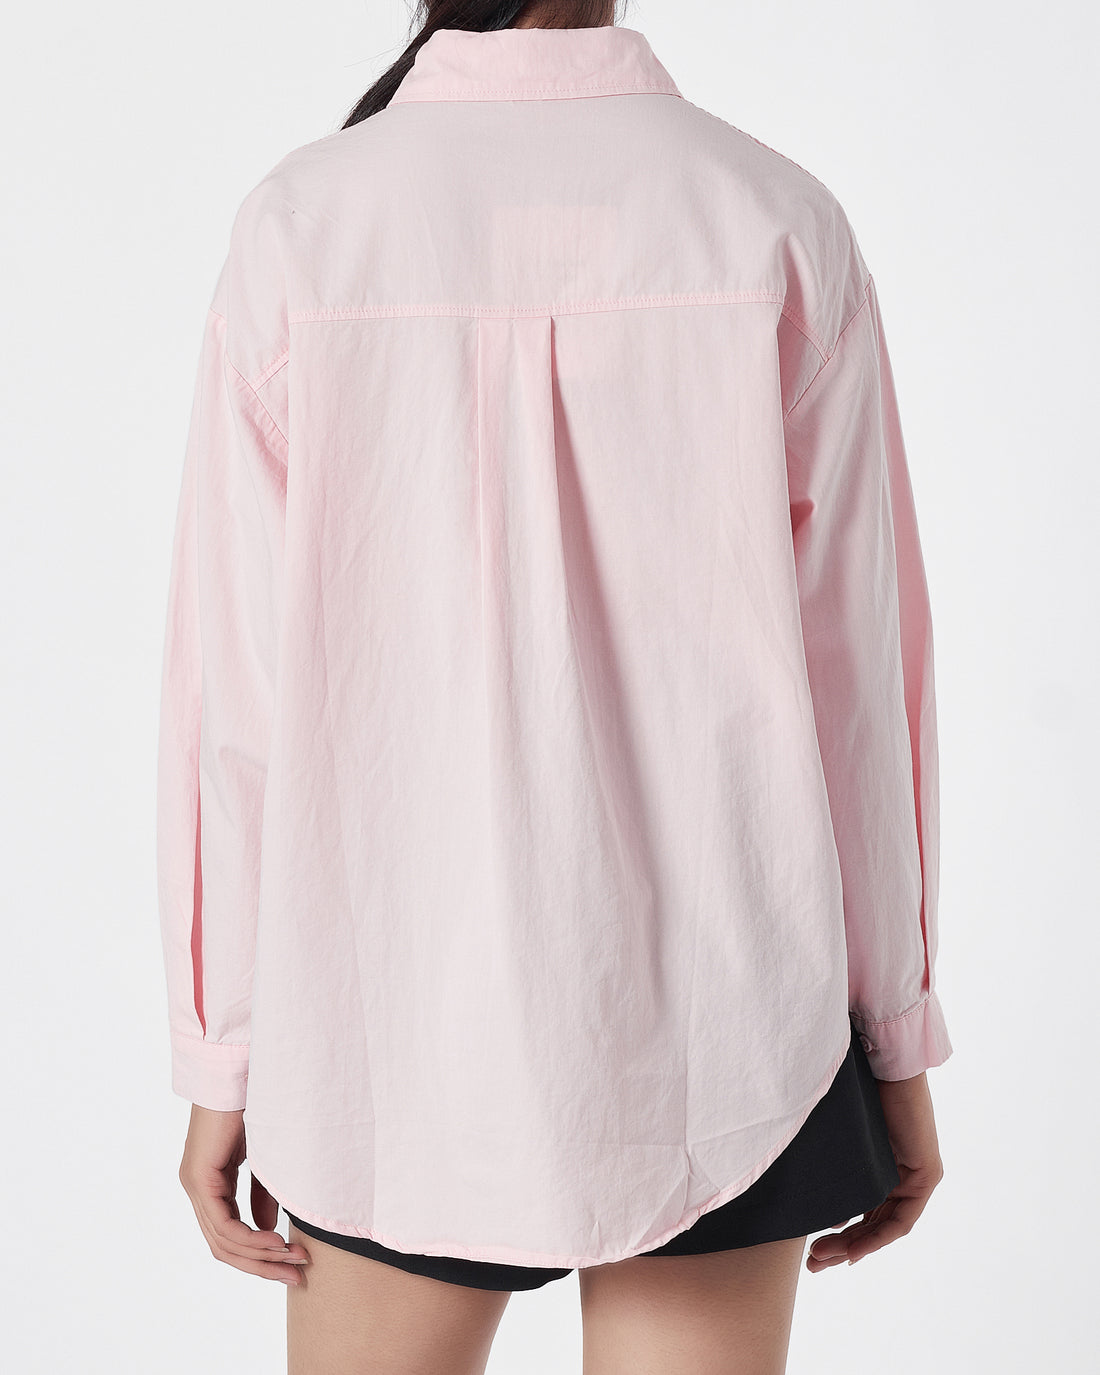 Plain Color Lady Pink Shirts Long Sleeve 14.90